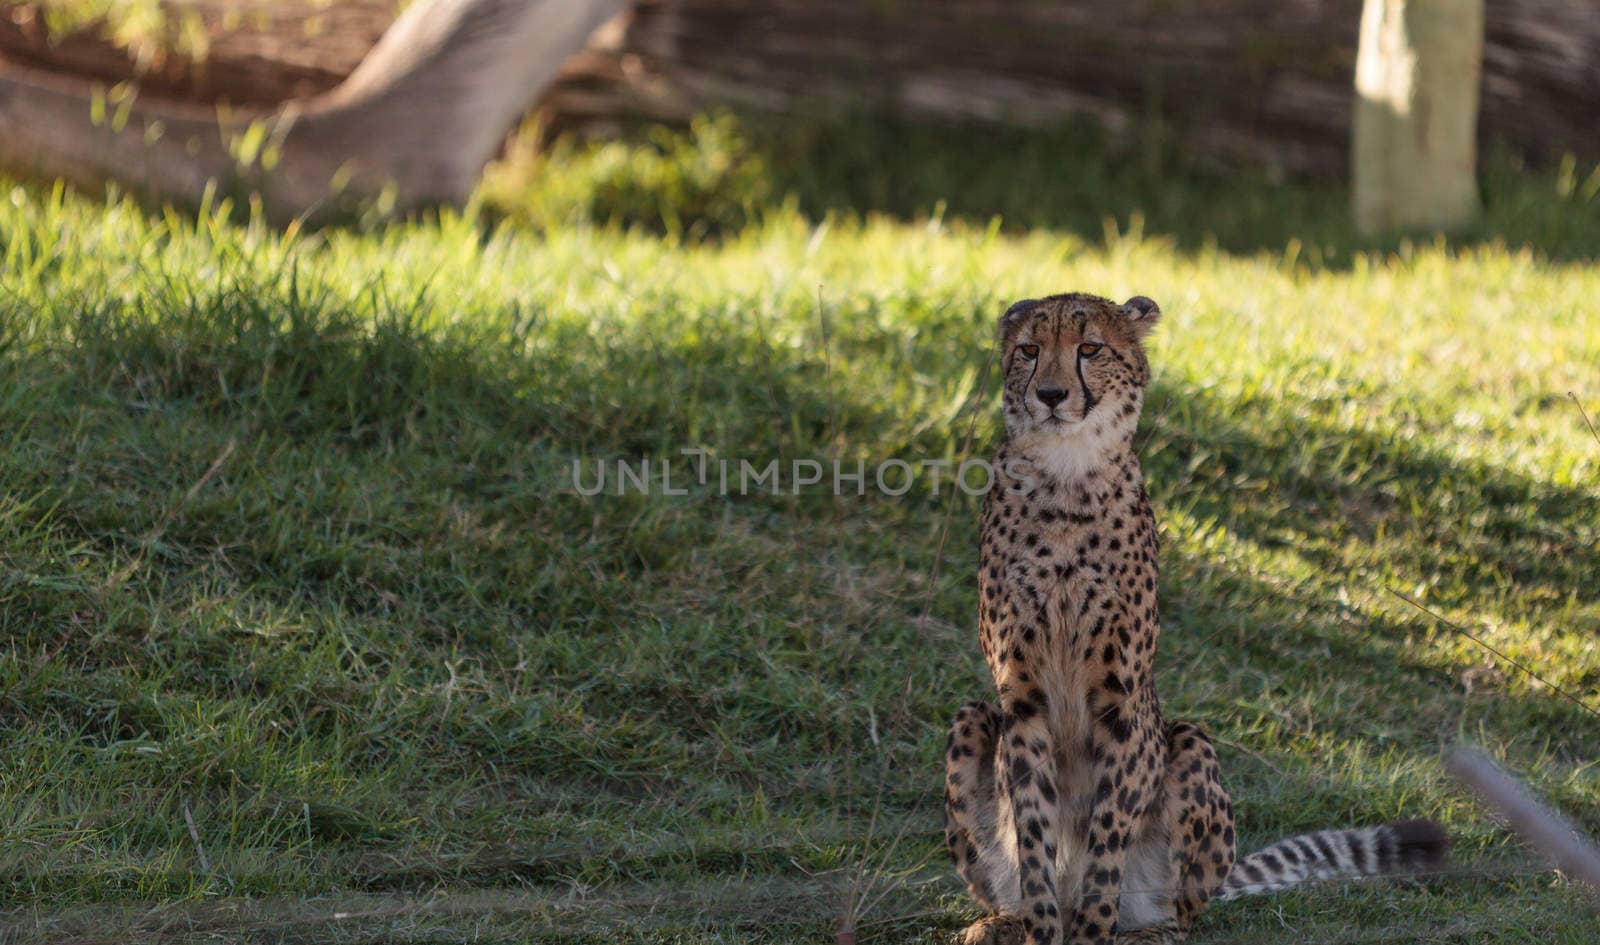 Cheetah, Acinonyx jubatus by steffstarr